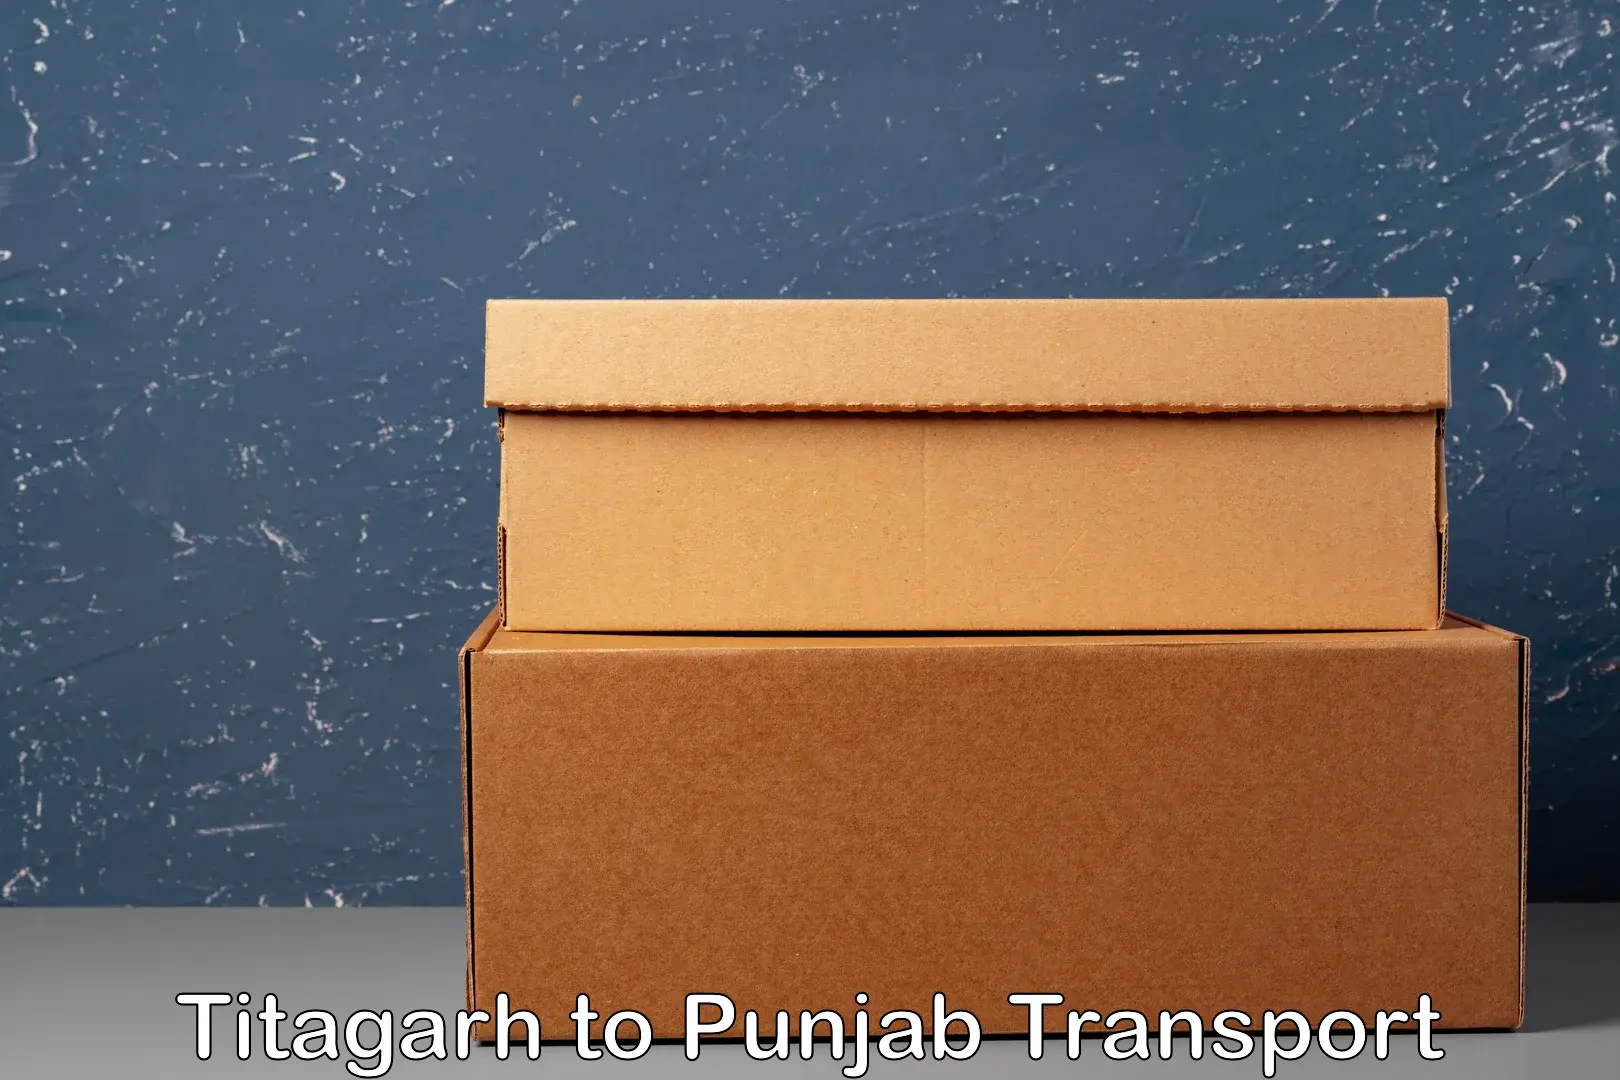 Online transport service Titagarh to Ludhiana